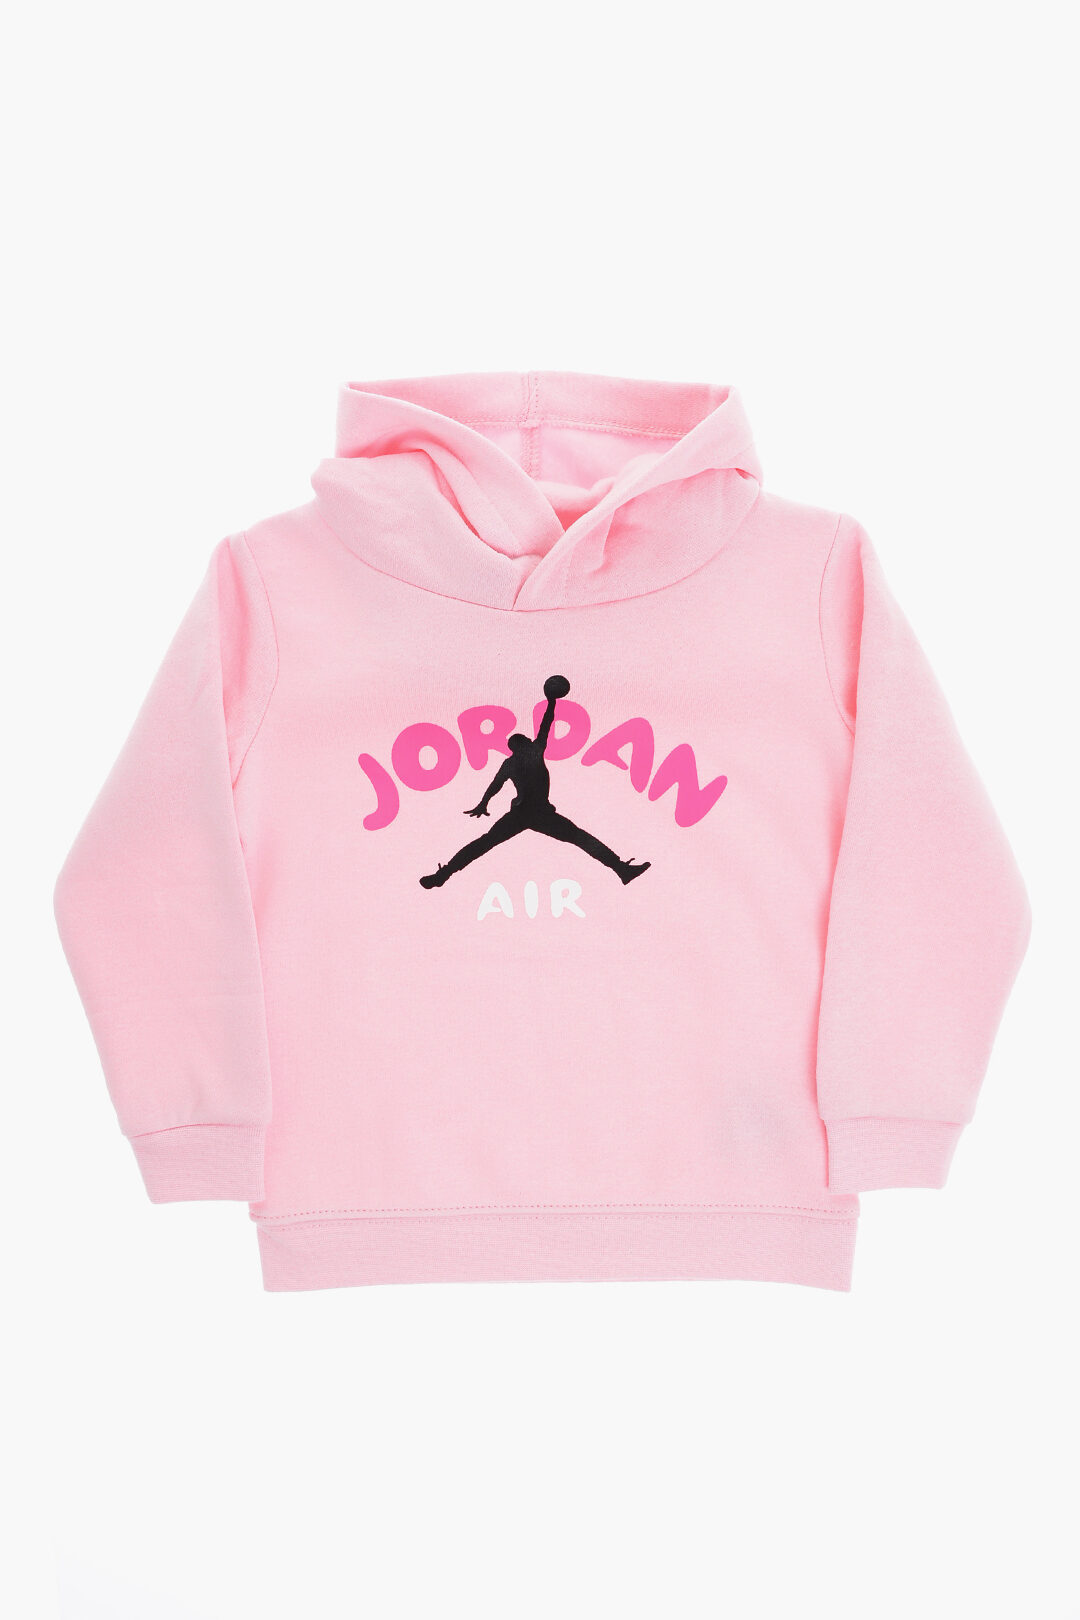 Nike KIDS AIR JORDAN Fleeced Cotton Hoodie and Joggers Set girls